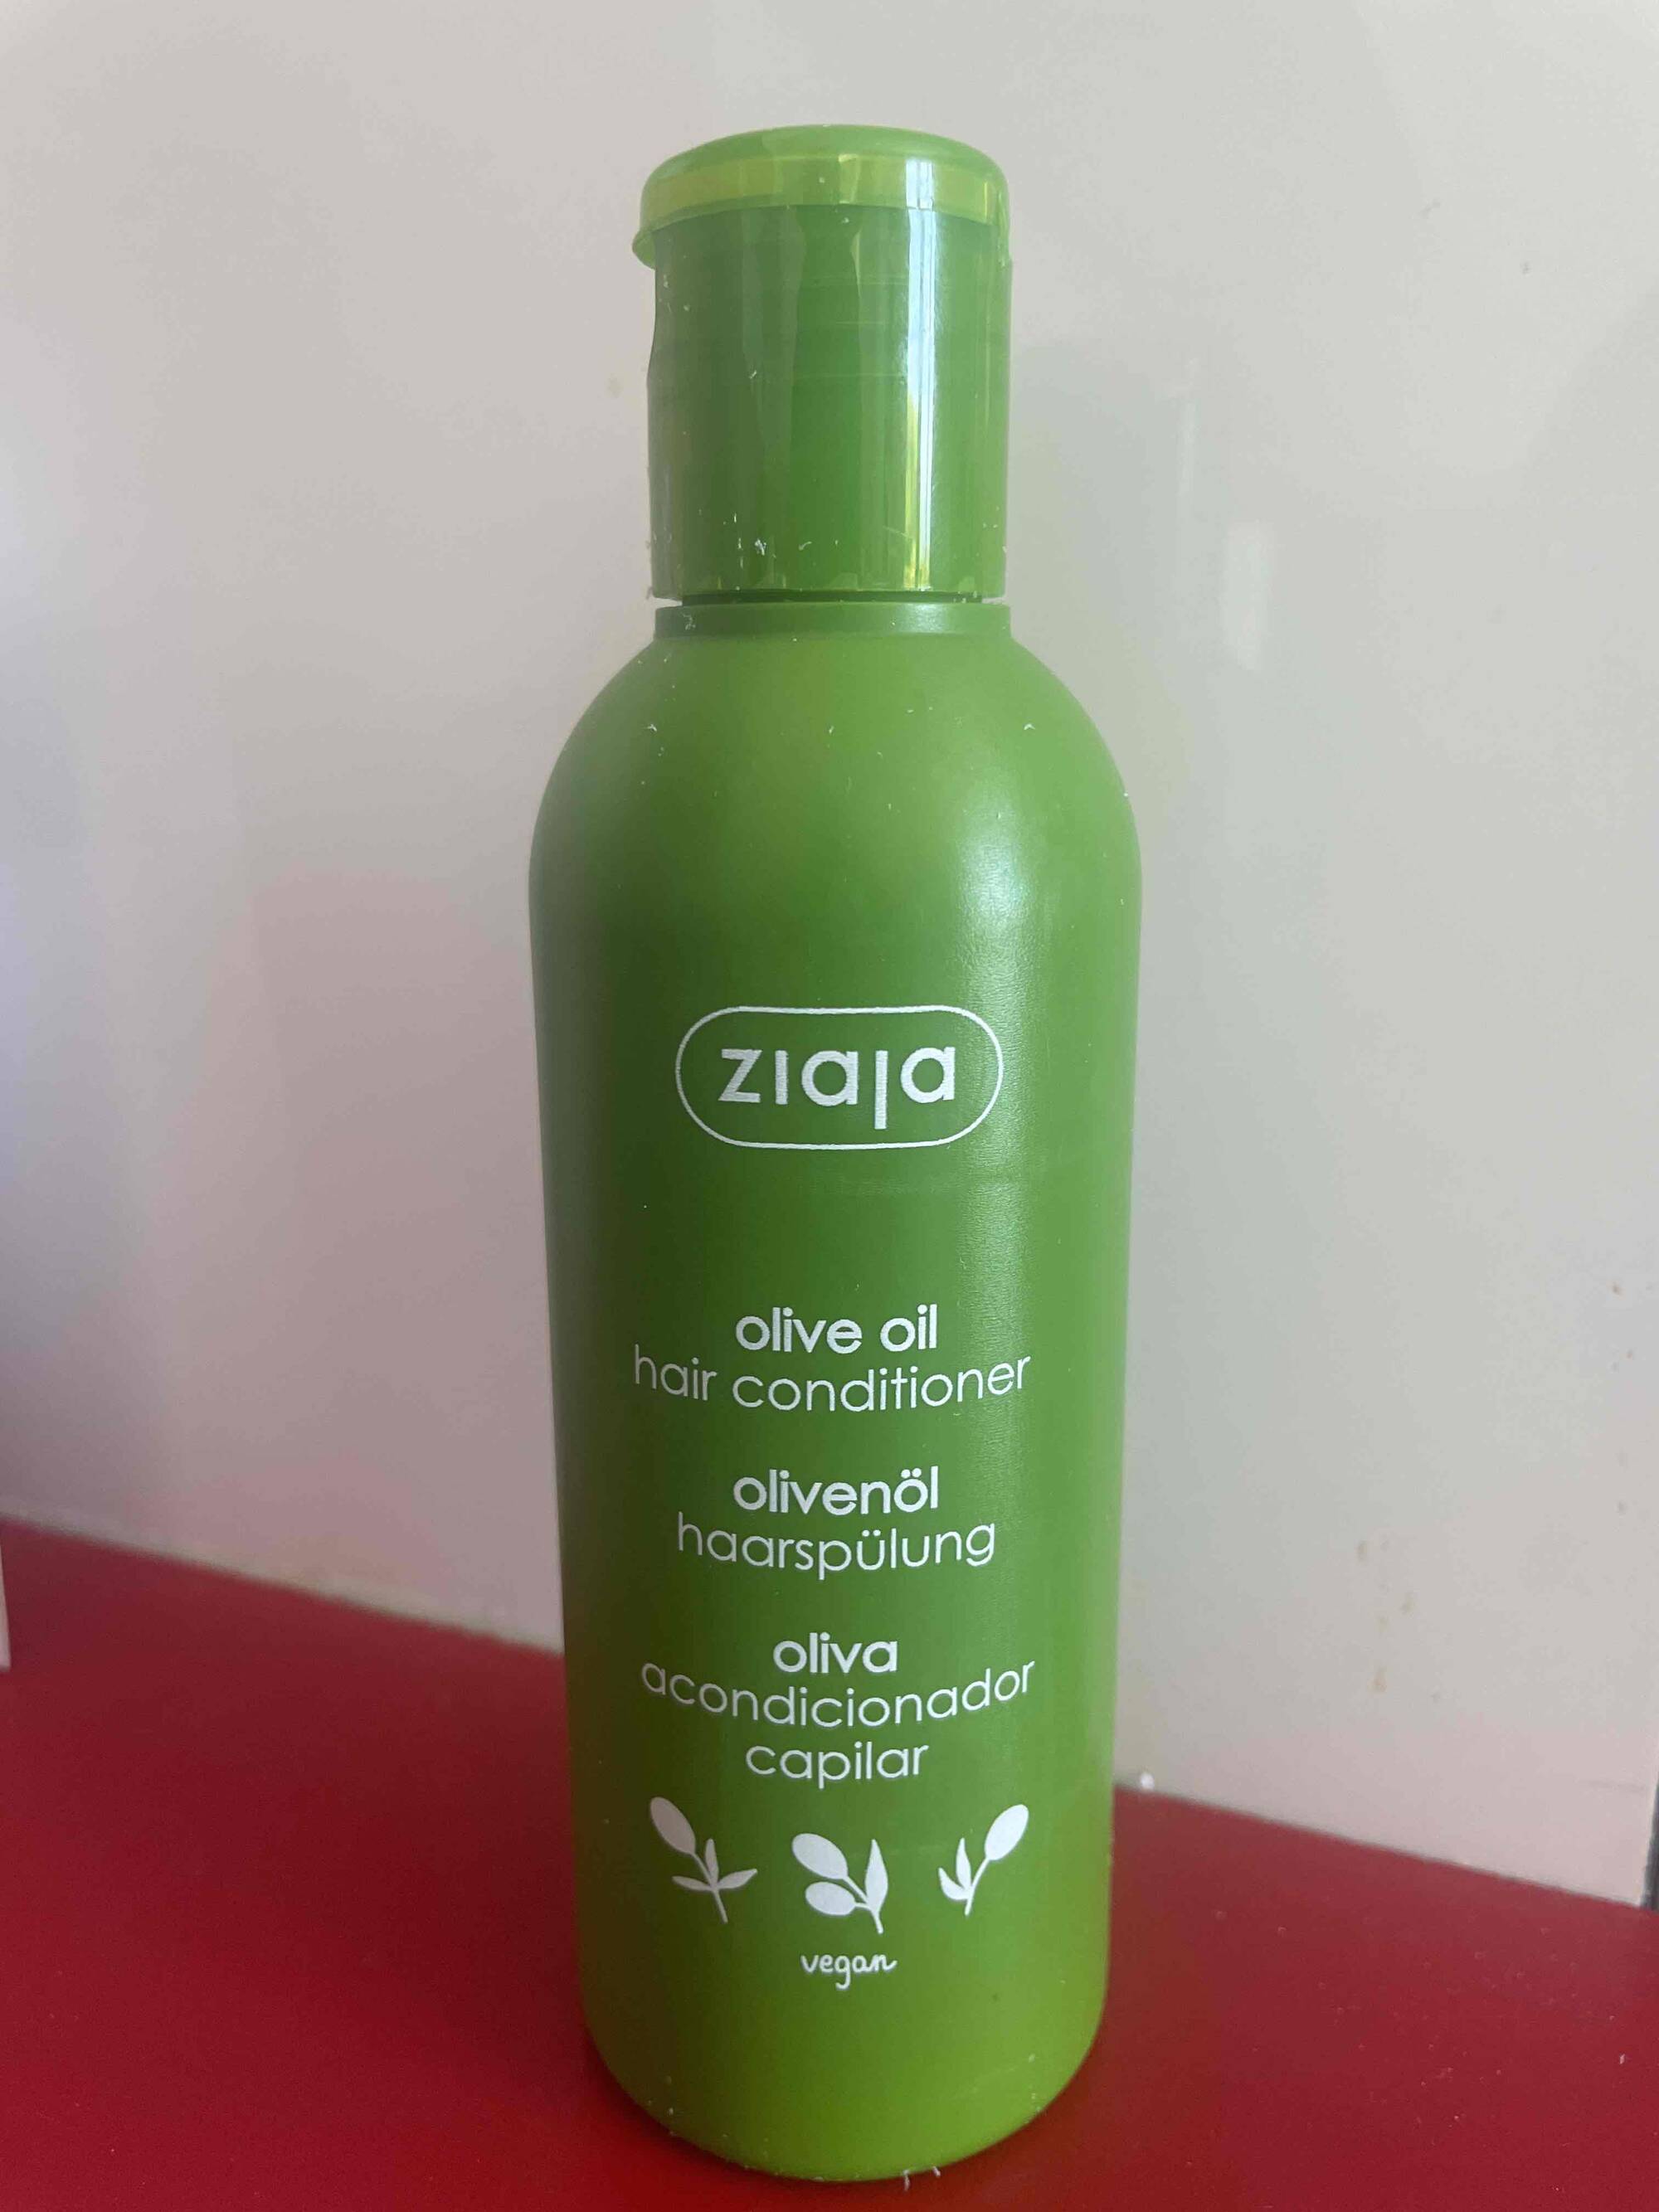 ZIAJA - Olive oil hair conditioner